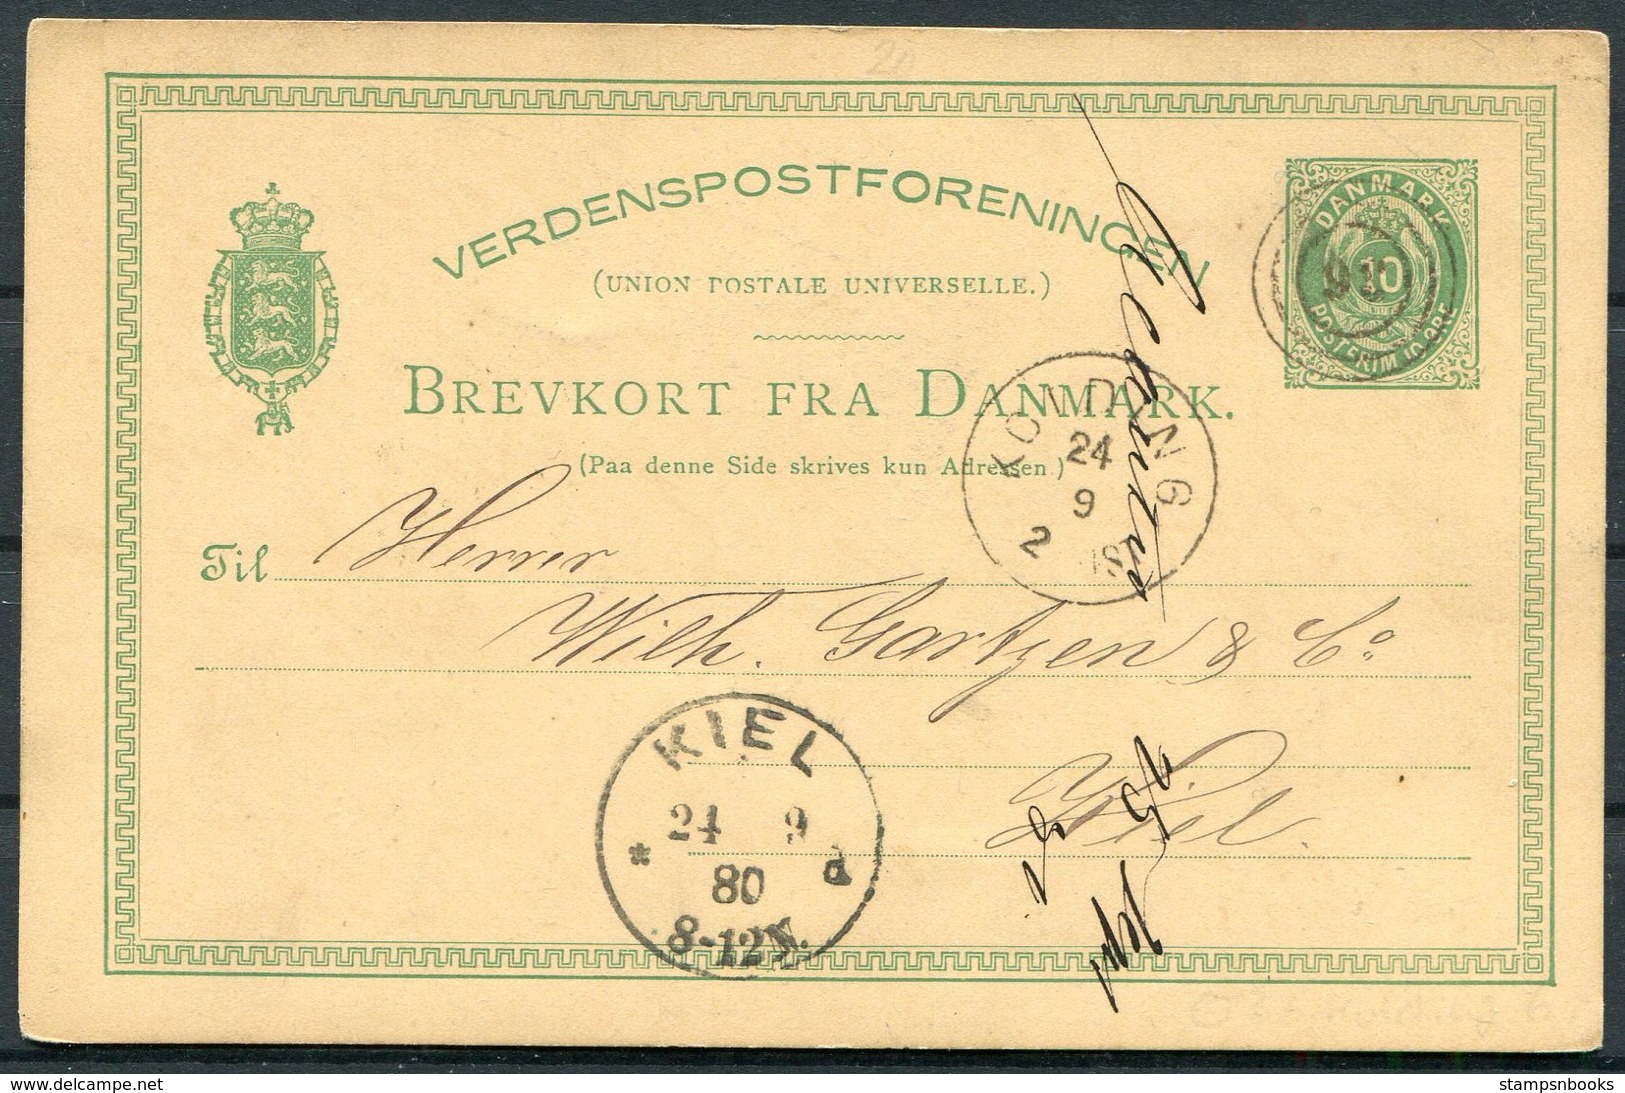 1880 Denmark 10 Ore Stationery Postcard, Kolding - Kiel Germany - Covers & Documents